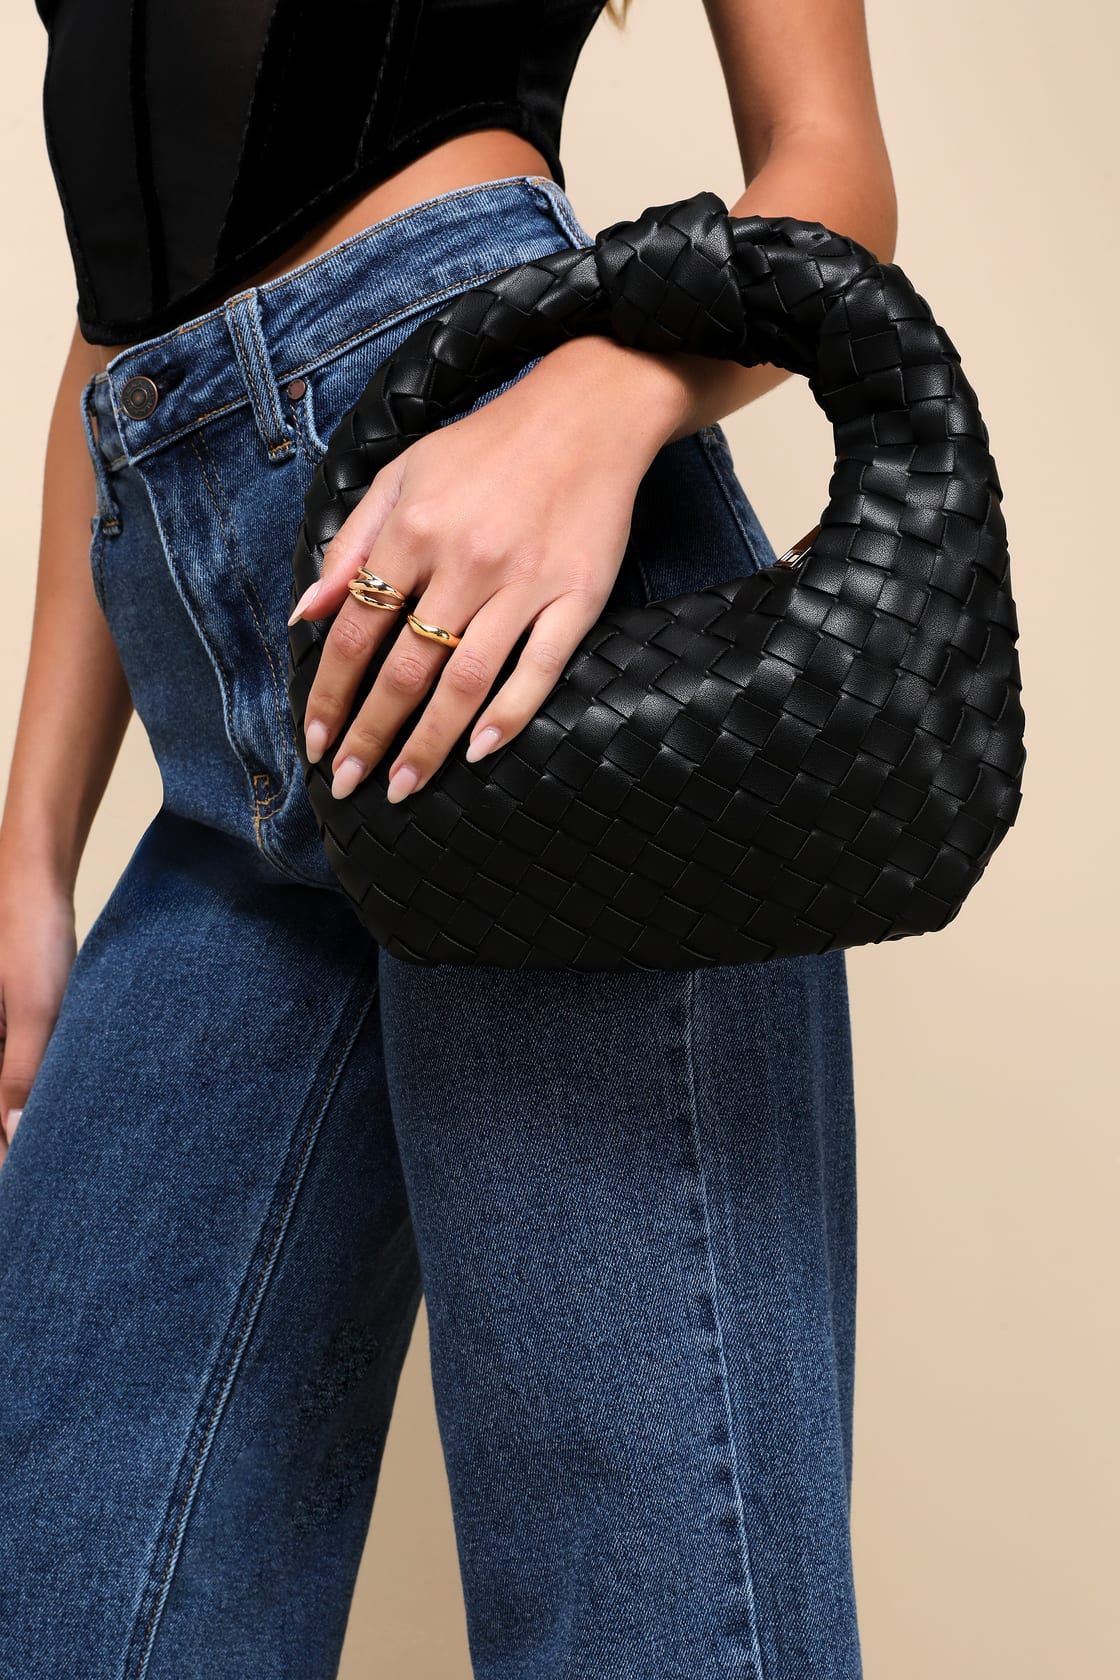 Mejia Black Woven Knotted Handbag | Lulus